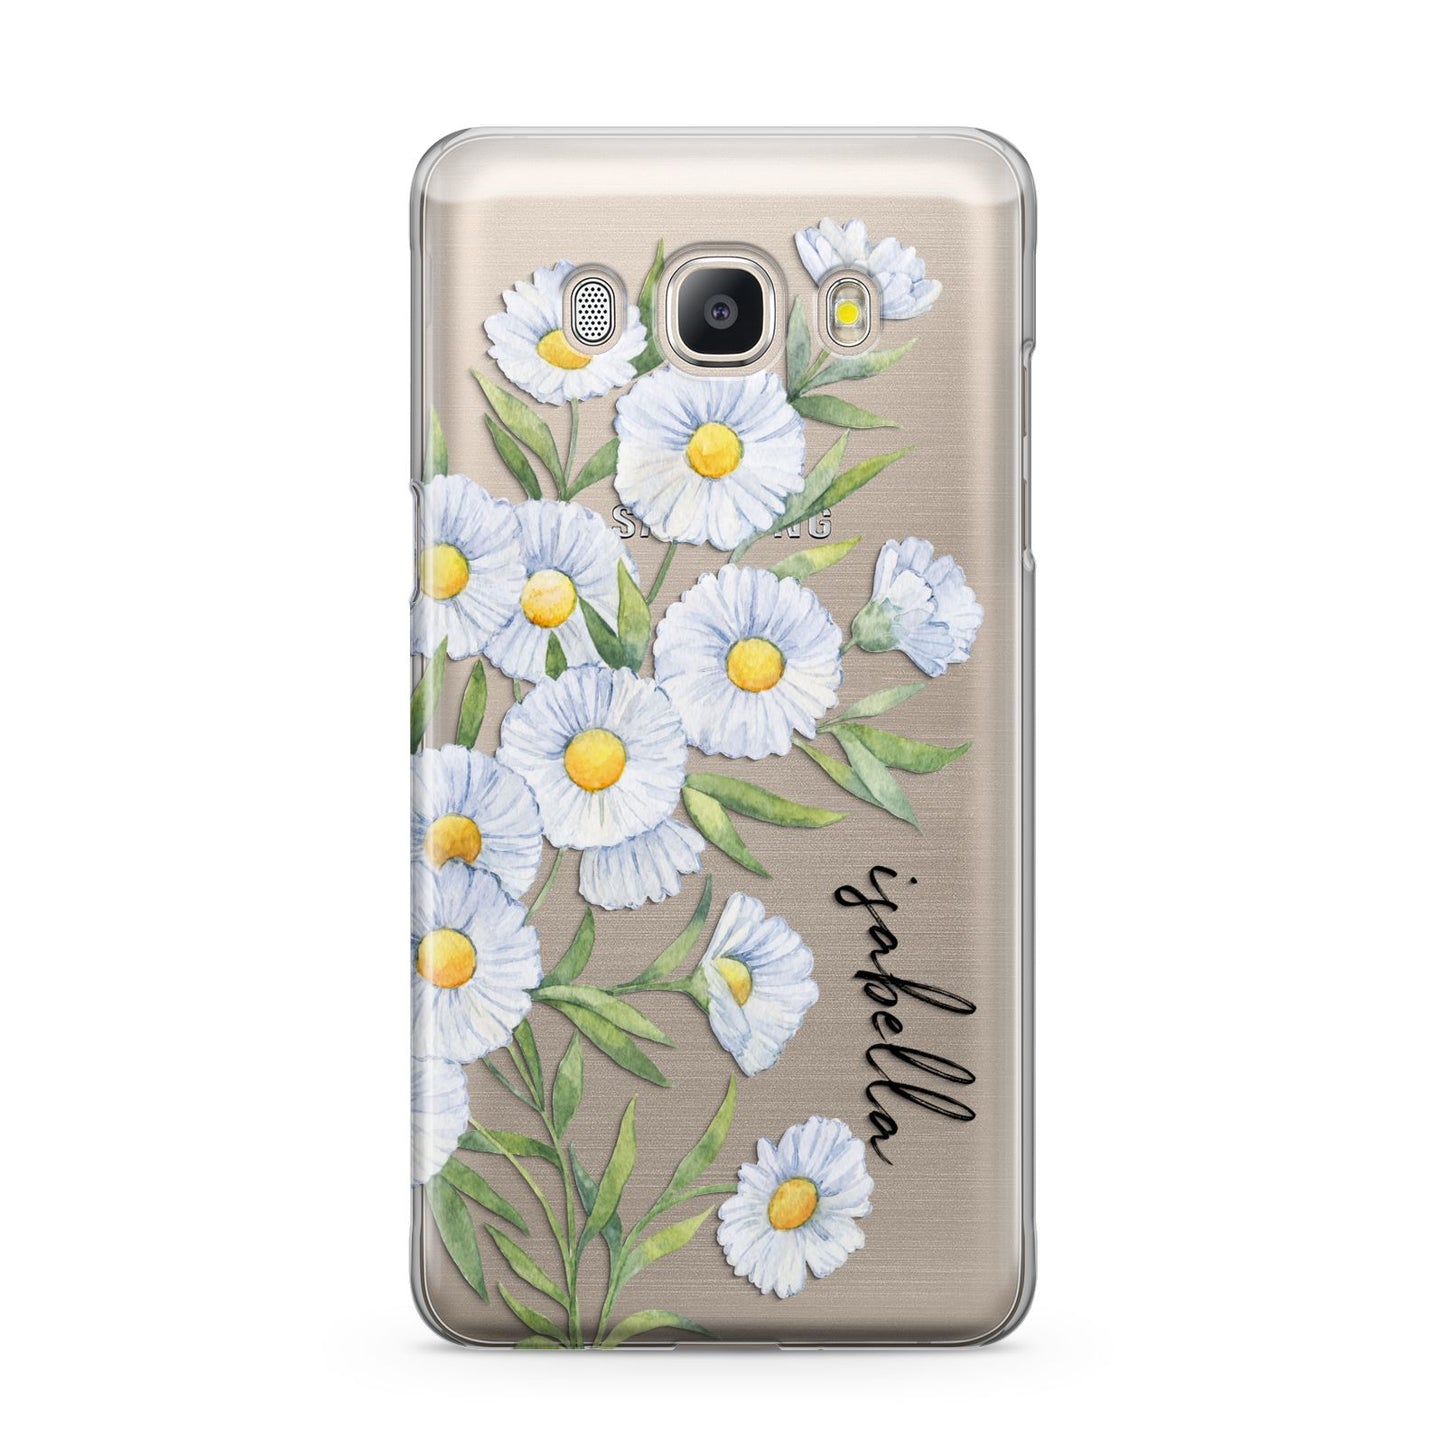 Personalised Daisy Flower Samsung Galaxy J5 2016 Case